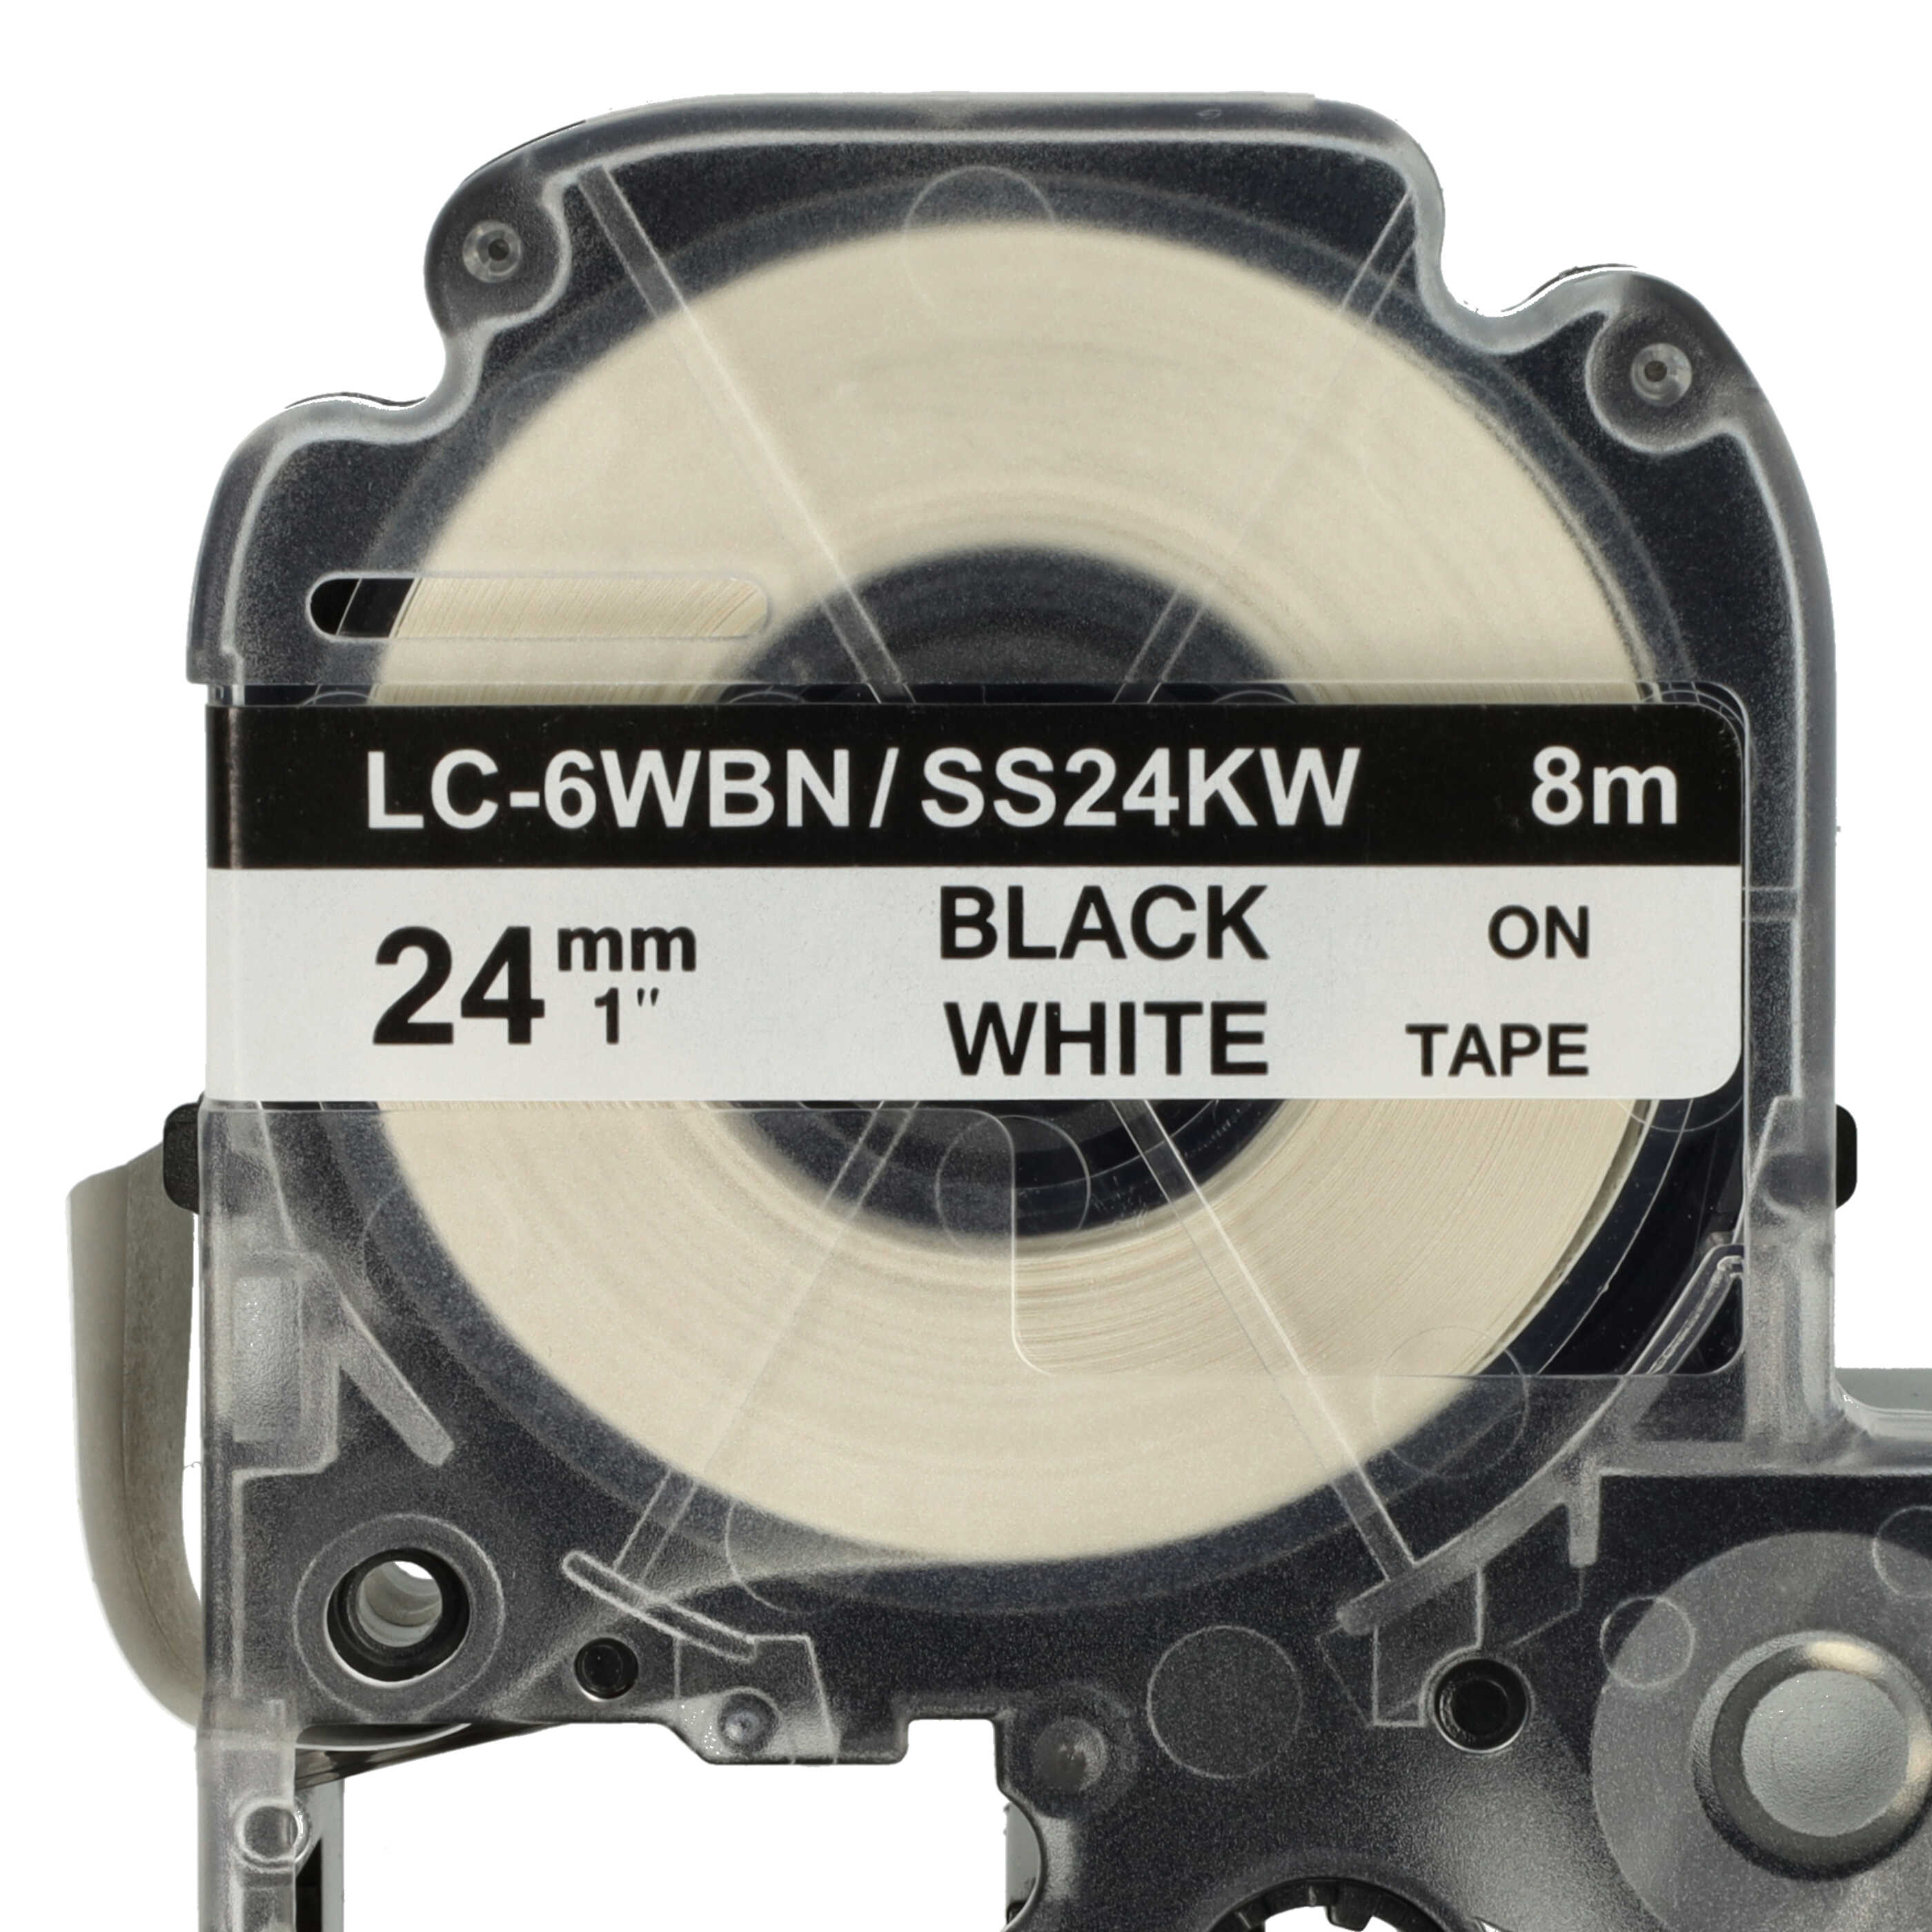 Casete cinta escritura reemplaza Epson LC-6WBN Negro su Blanco